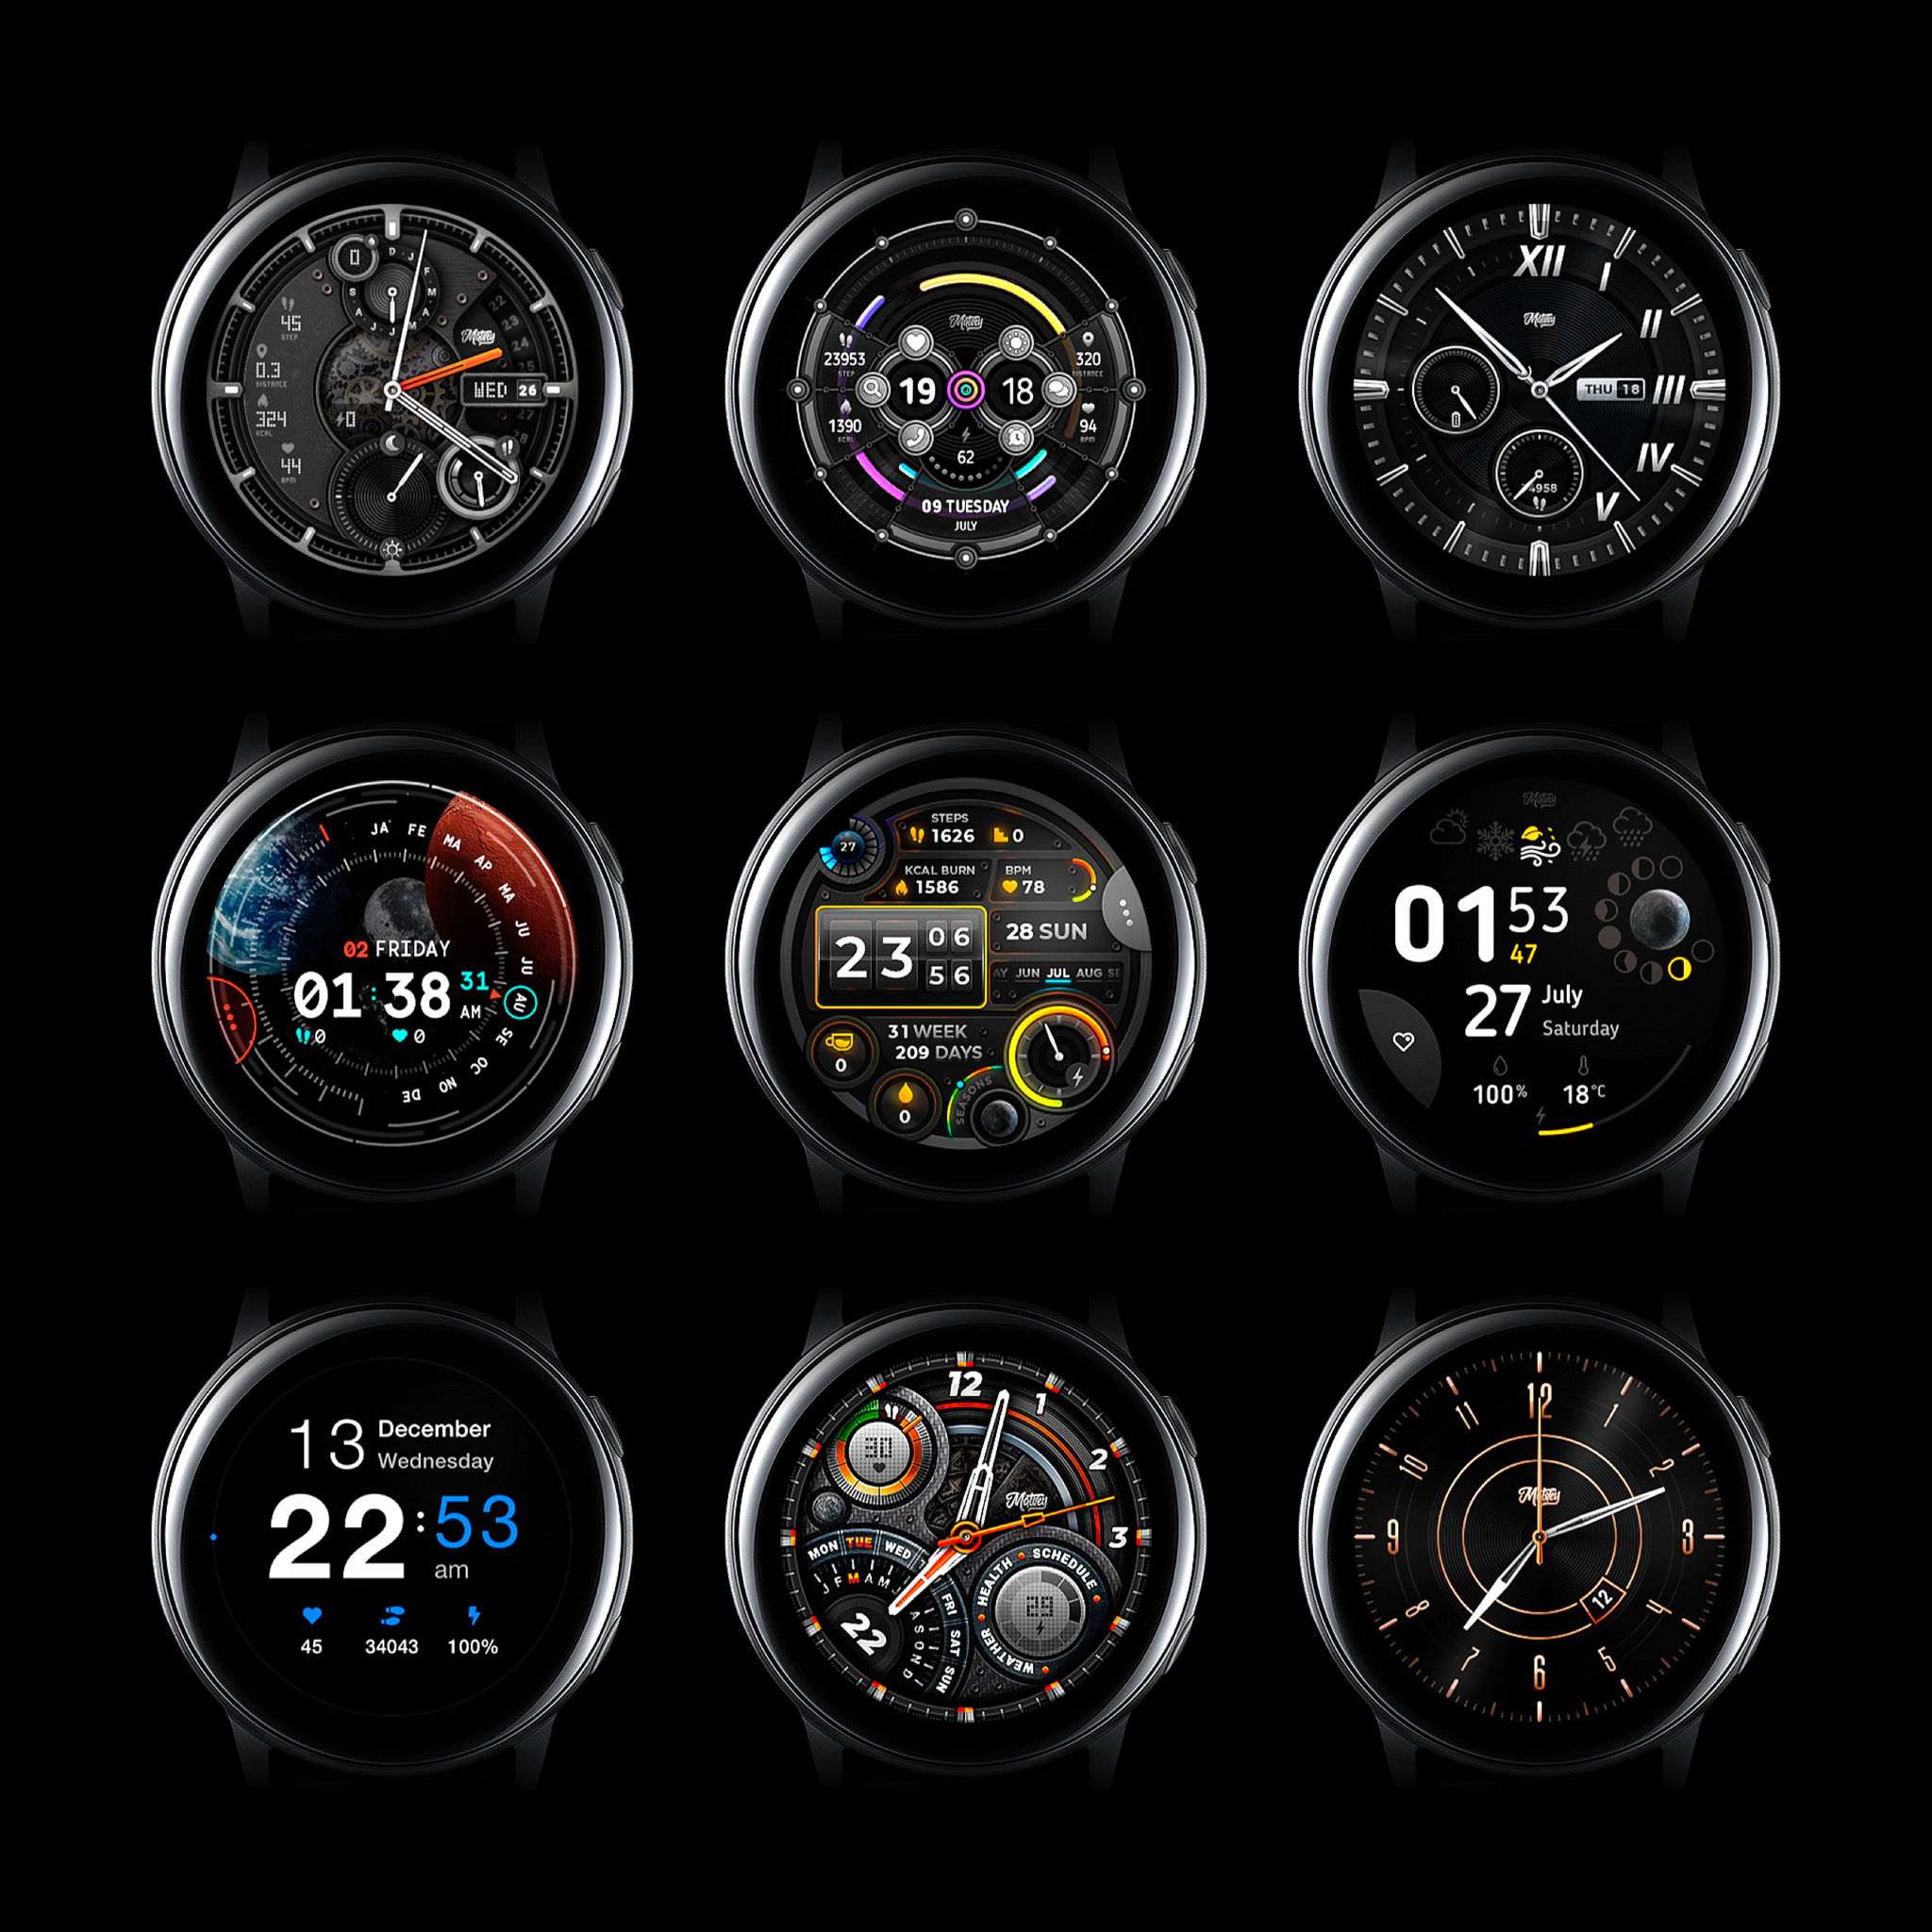 Циферблаты watch 3 pro. Галакси вотч 4 циферблаты. Циферблаты смарт часов галакси вотч. Watchface для Samsung Galaxy watch. Циферблаты для x22 Pro.